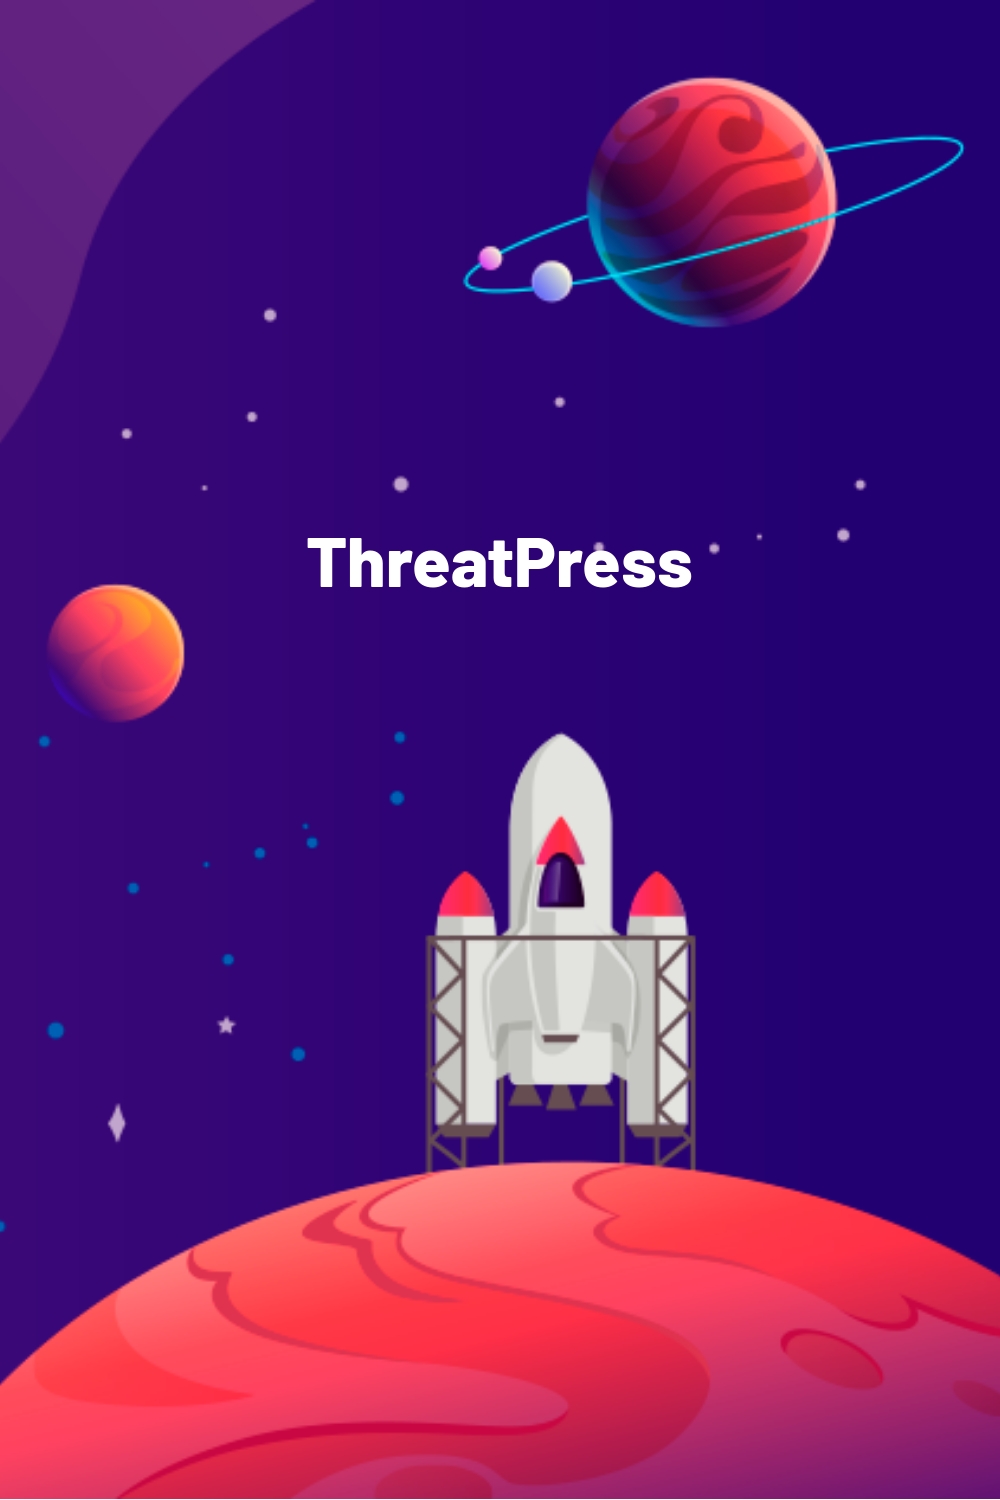 ThreatPress